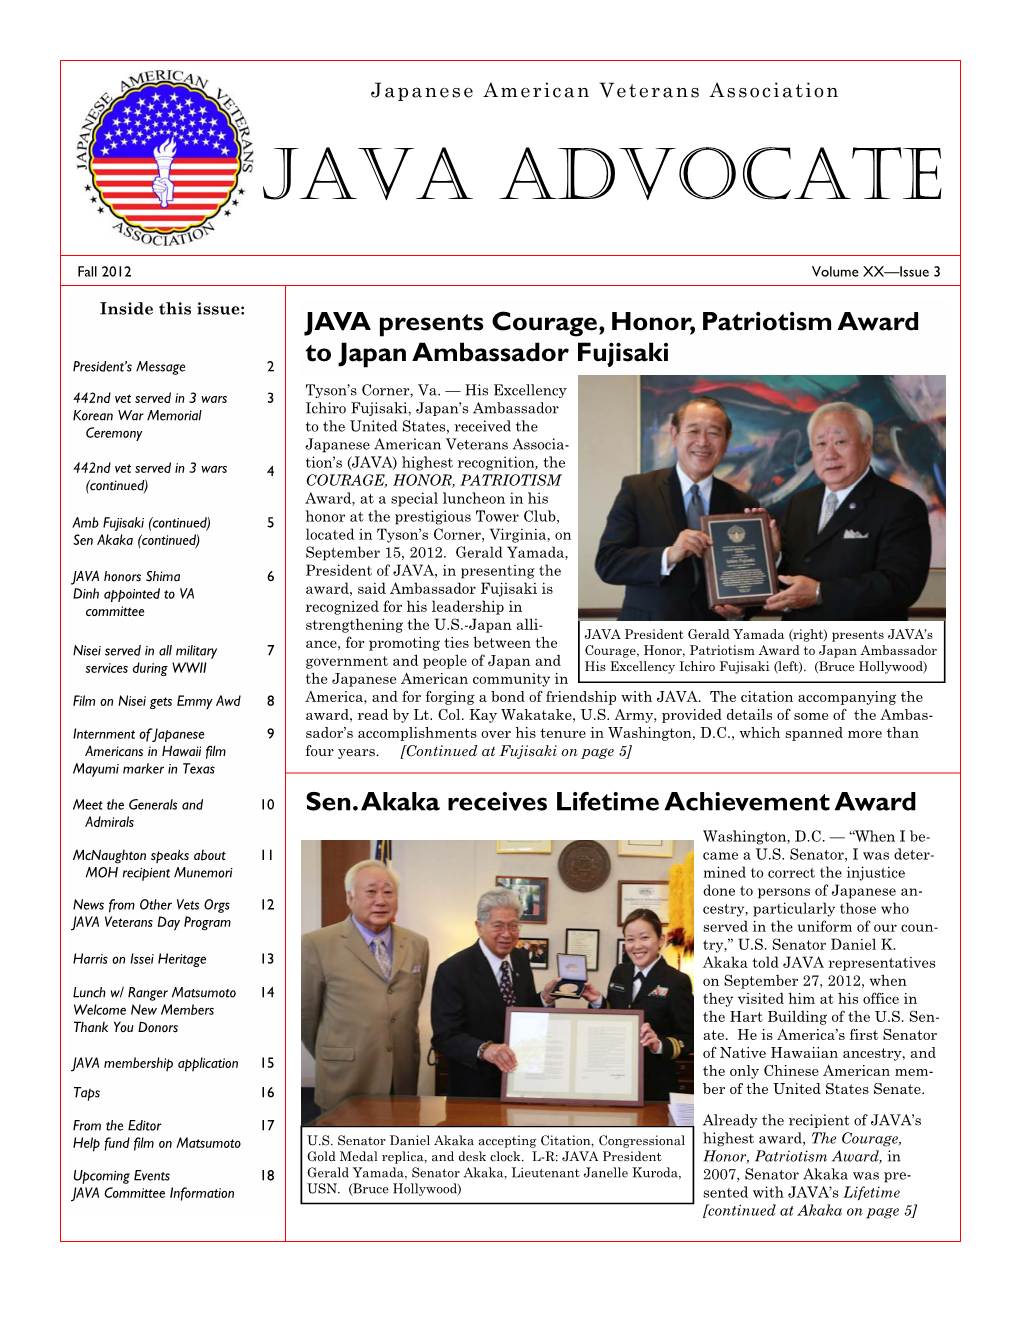 JAVA Advocate, Fall 2012 Edition